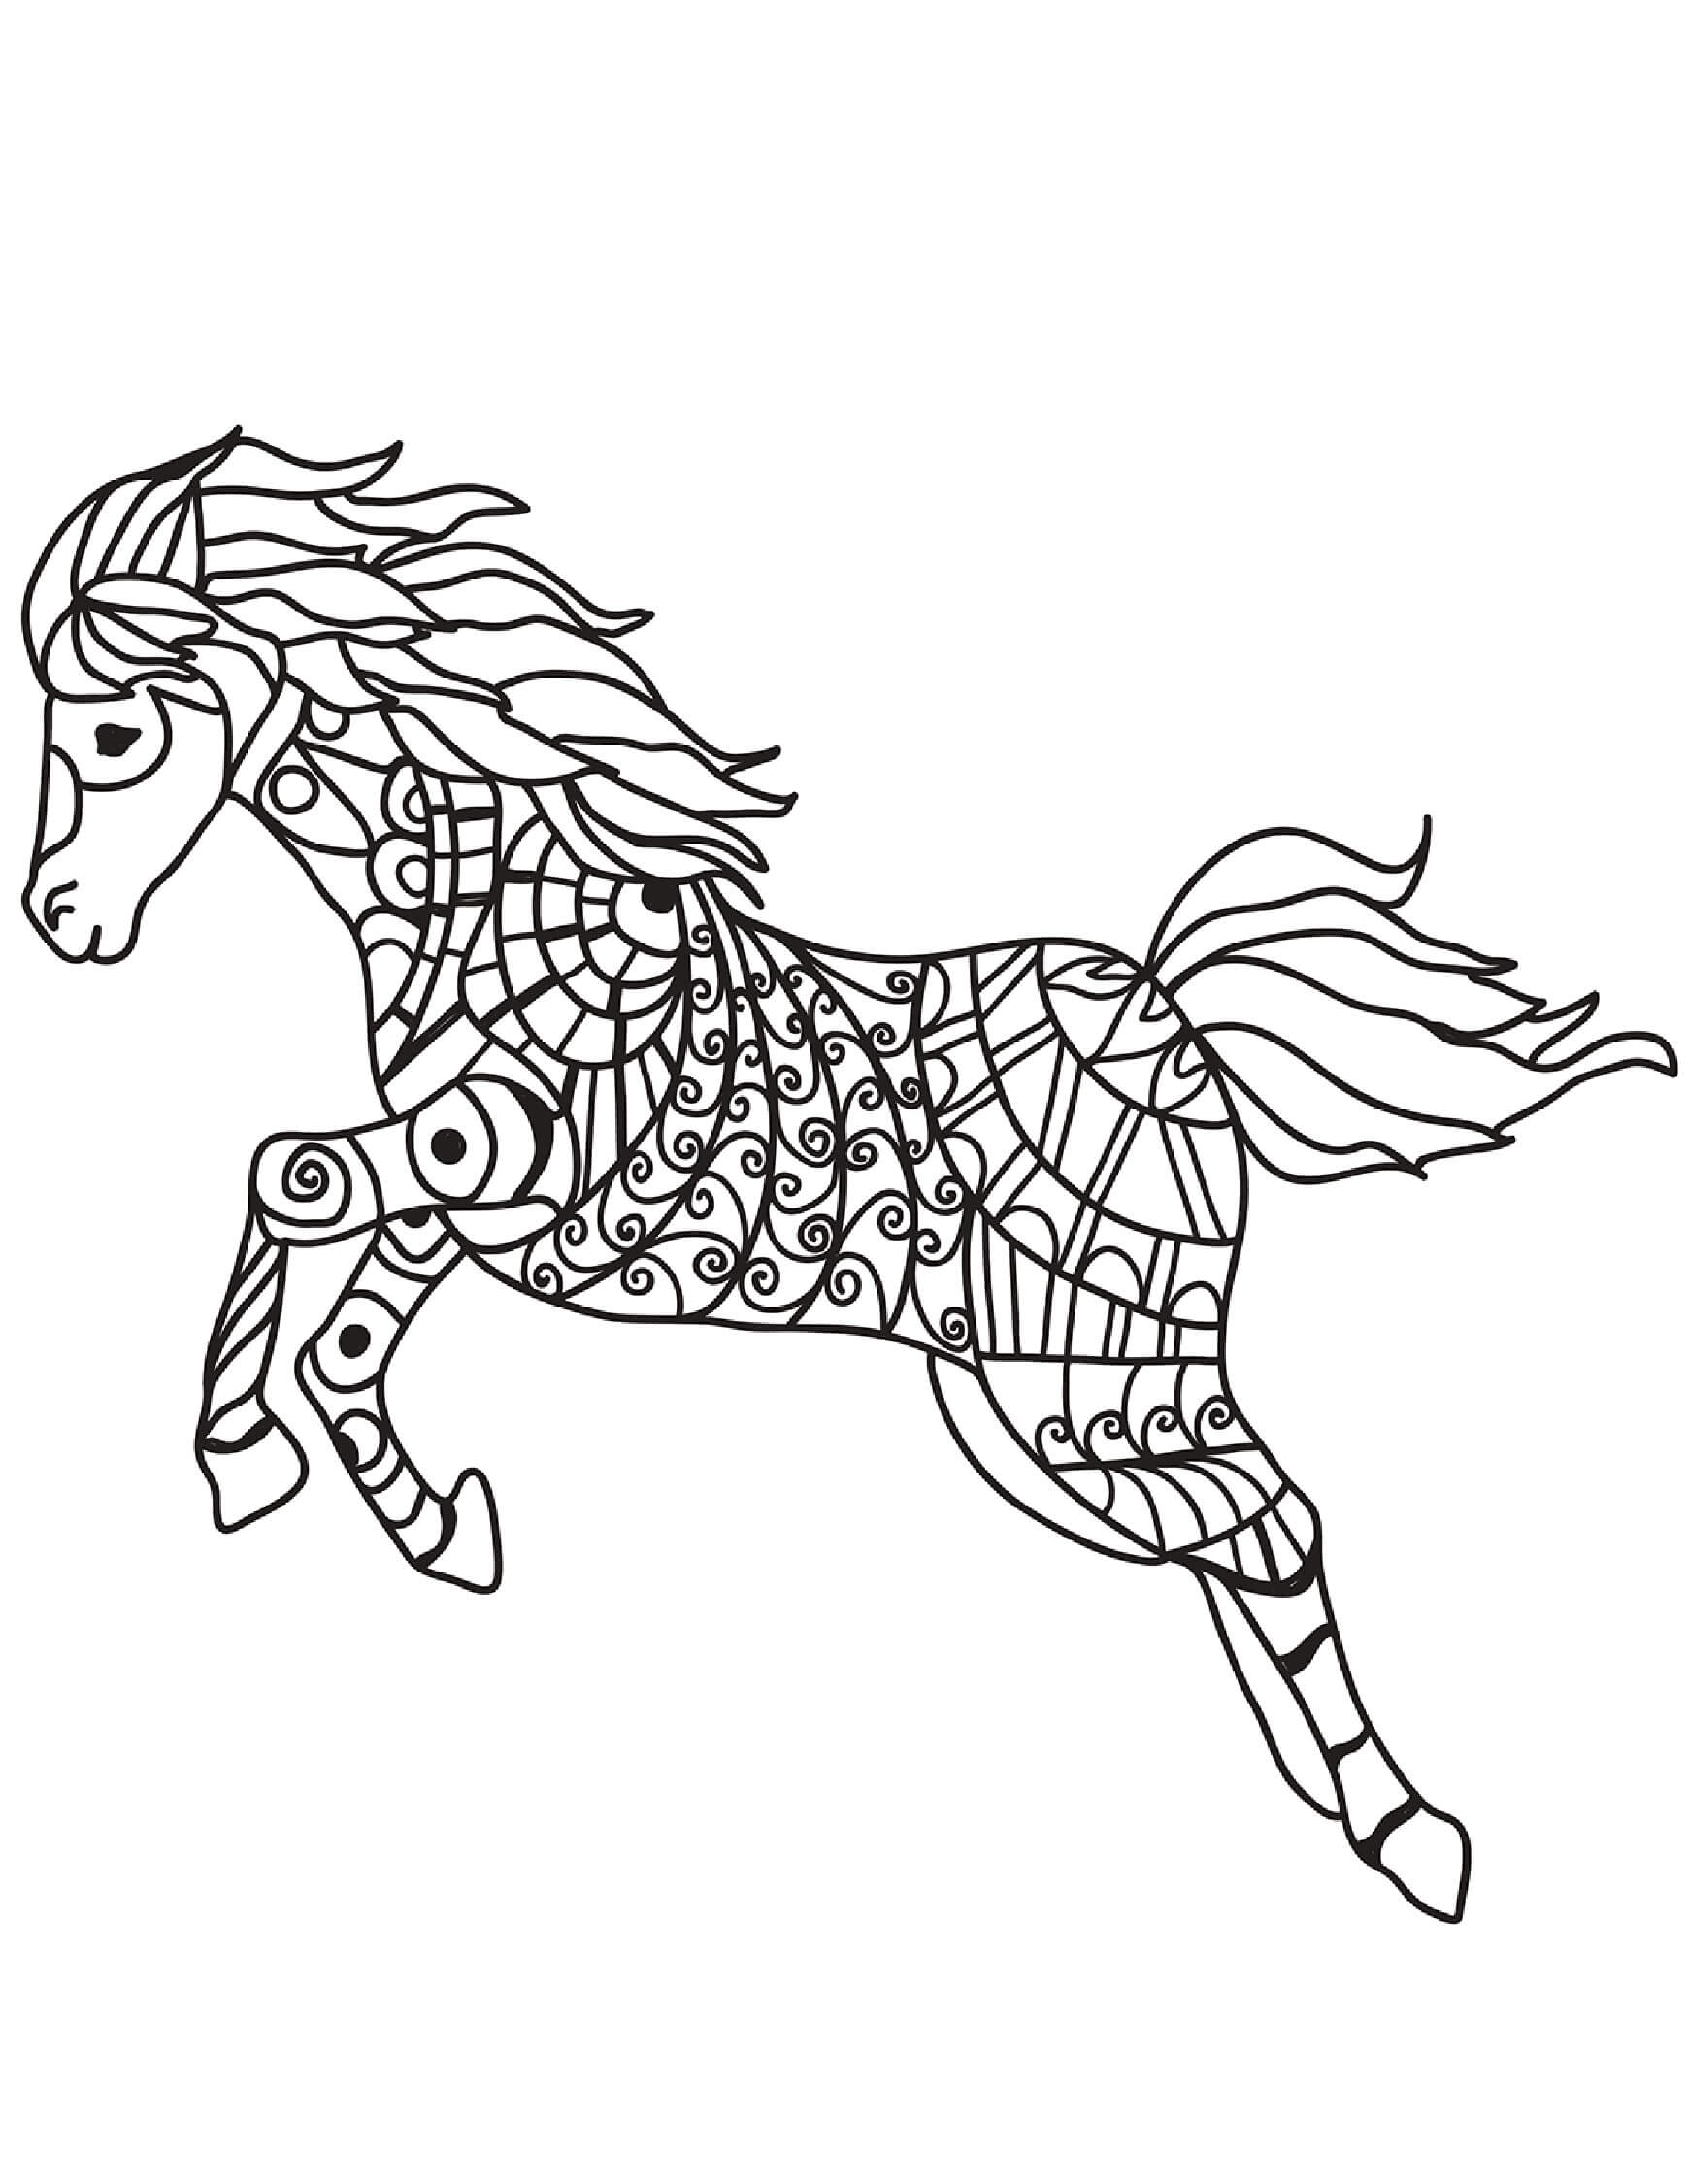 Mandala Horse Coloring Page - Sheet 16 Mandalas